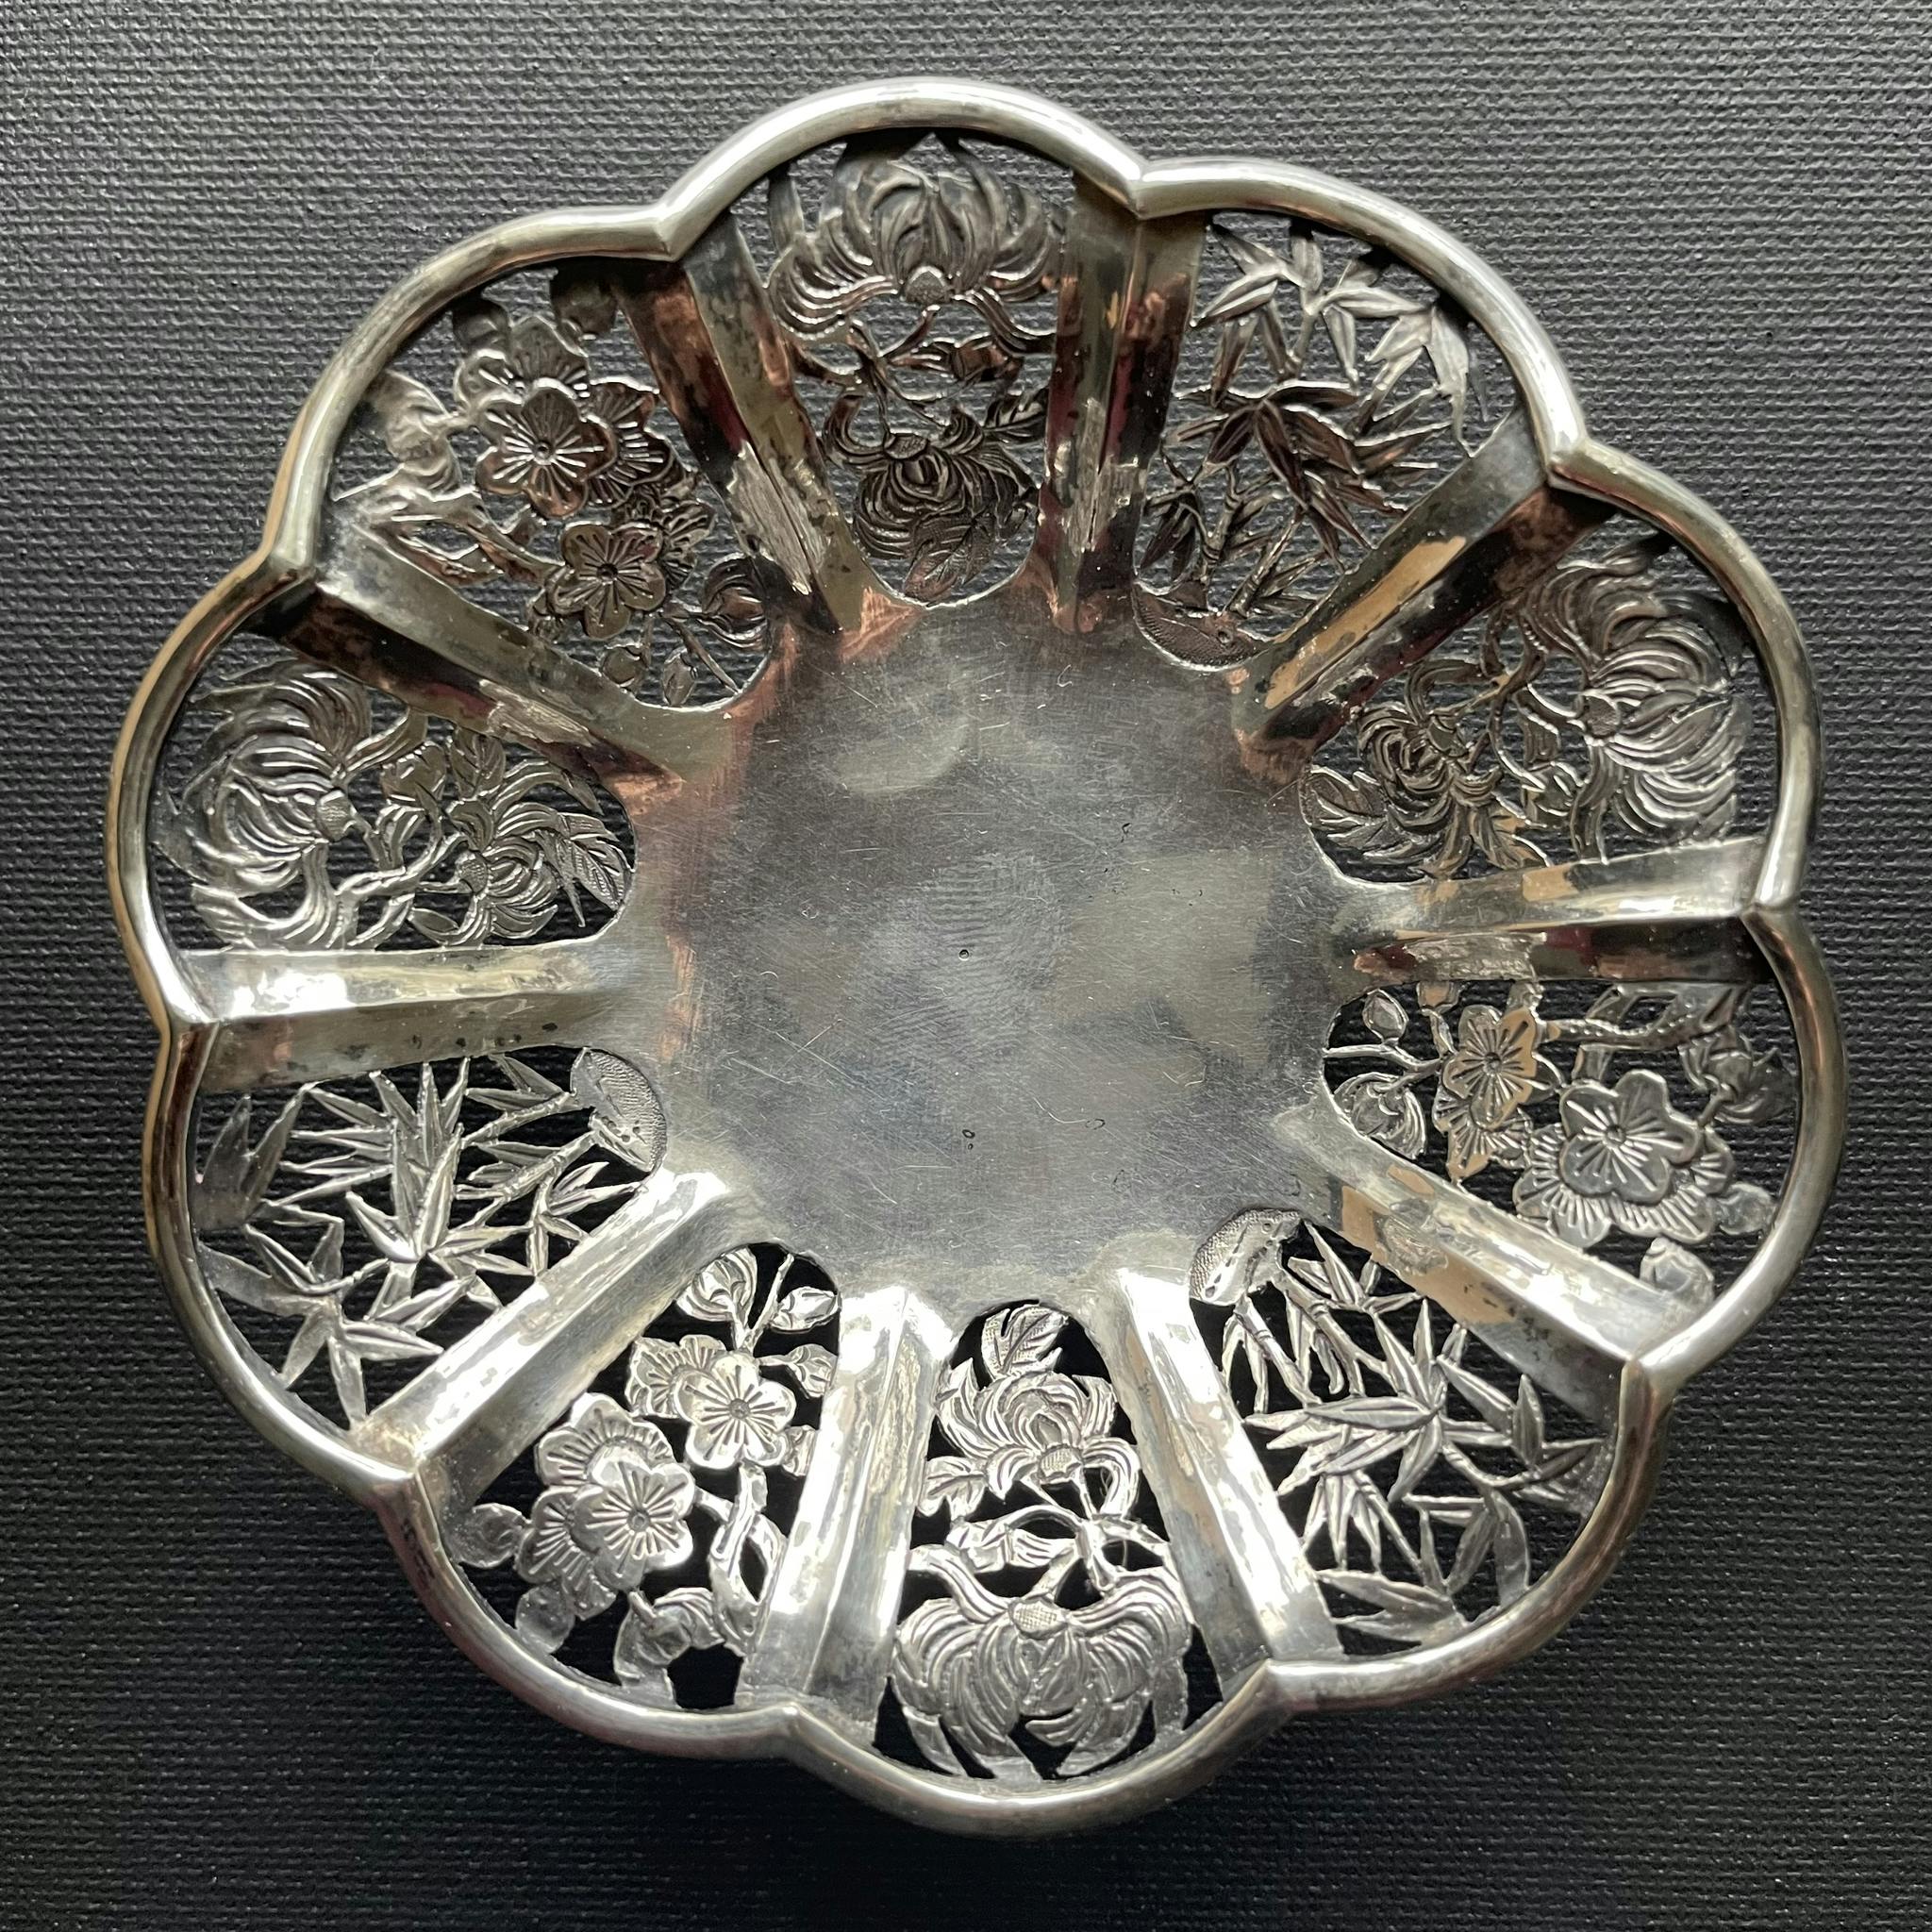 Antique pair of Chinese export silver bowls, Wang Hing company, Canton